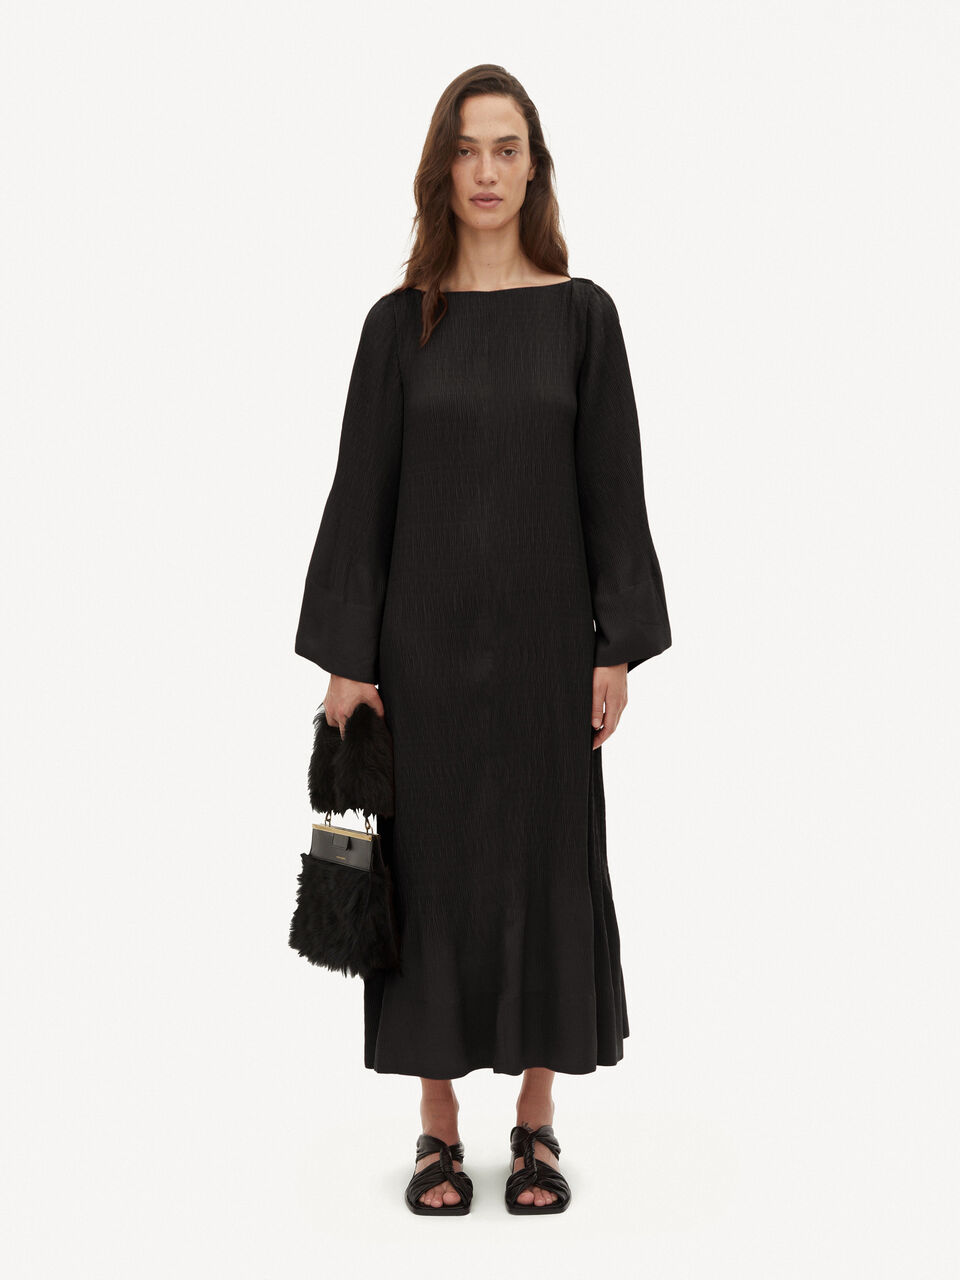 Genevieve maxi dress - Buy Dresses online